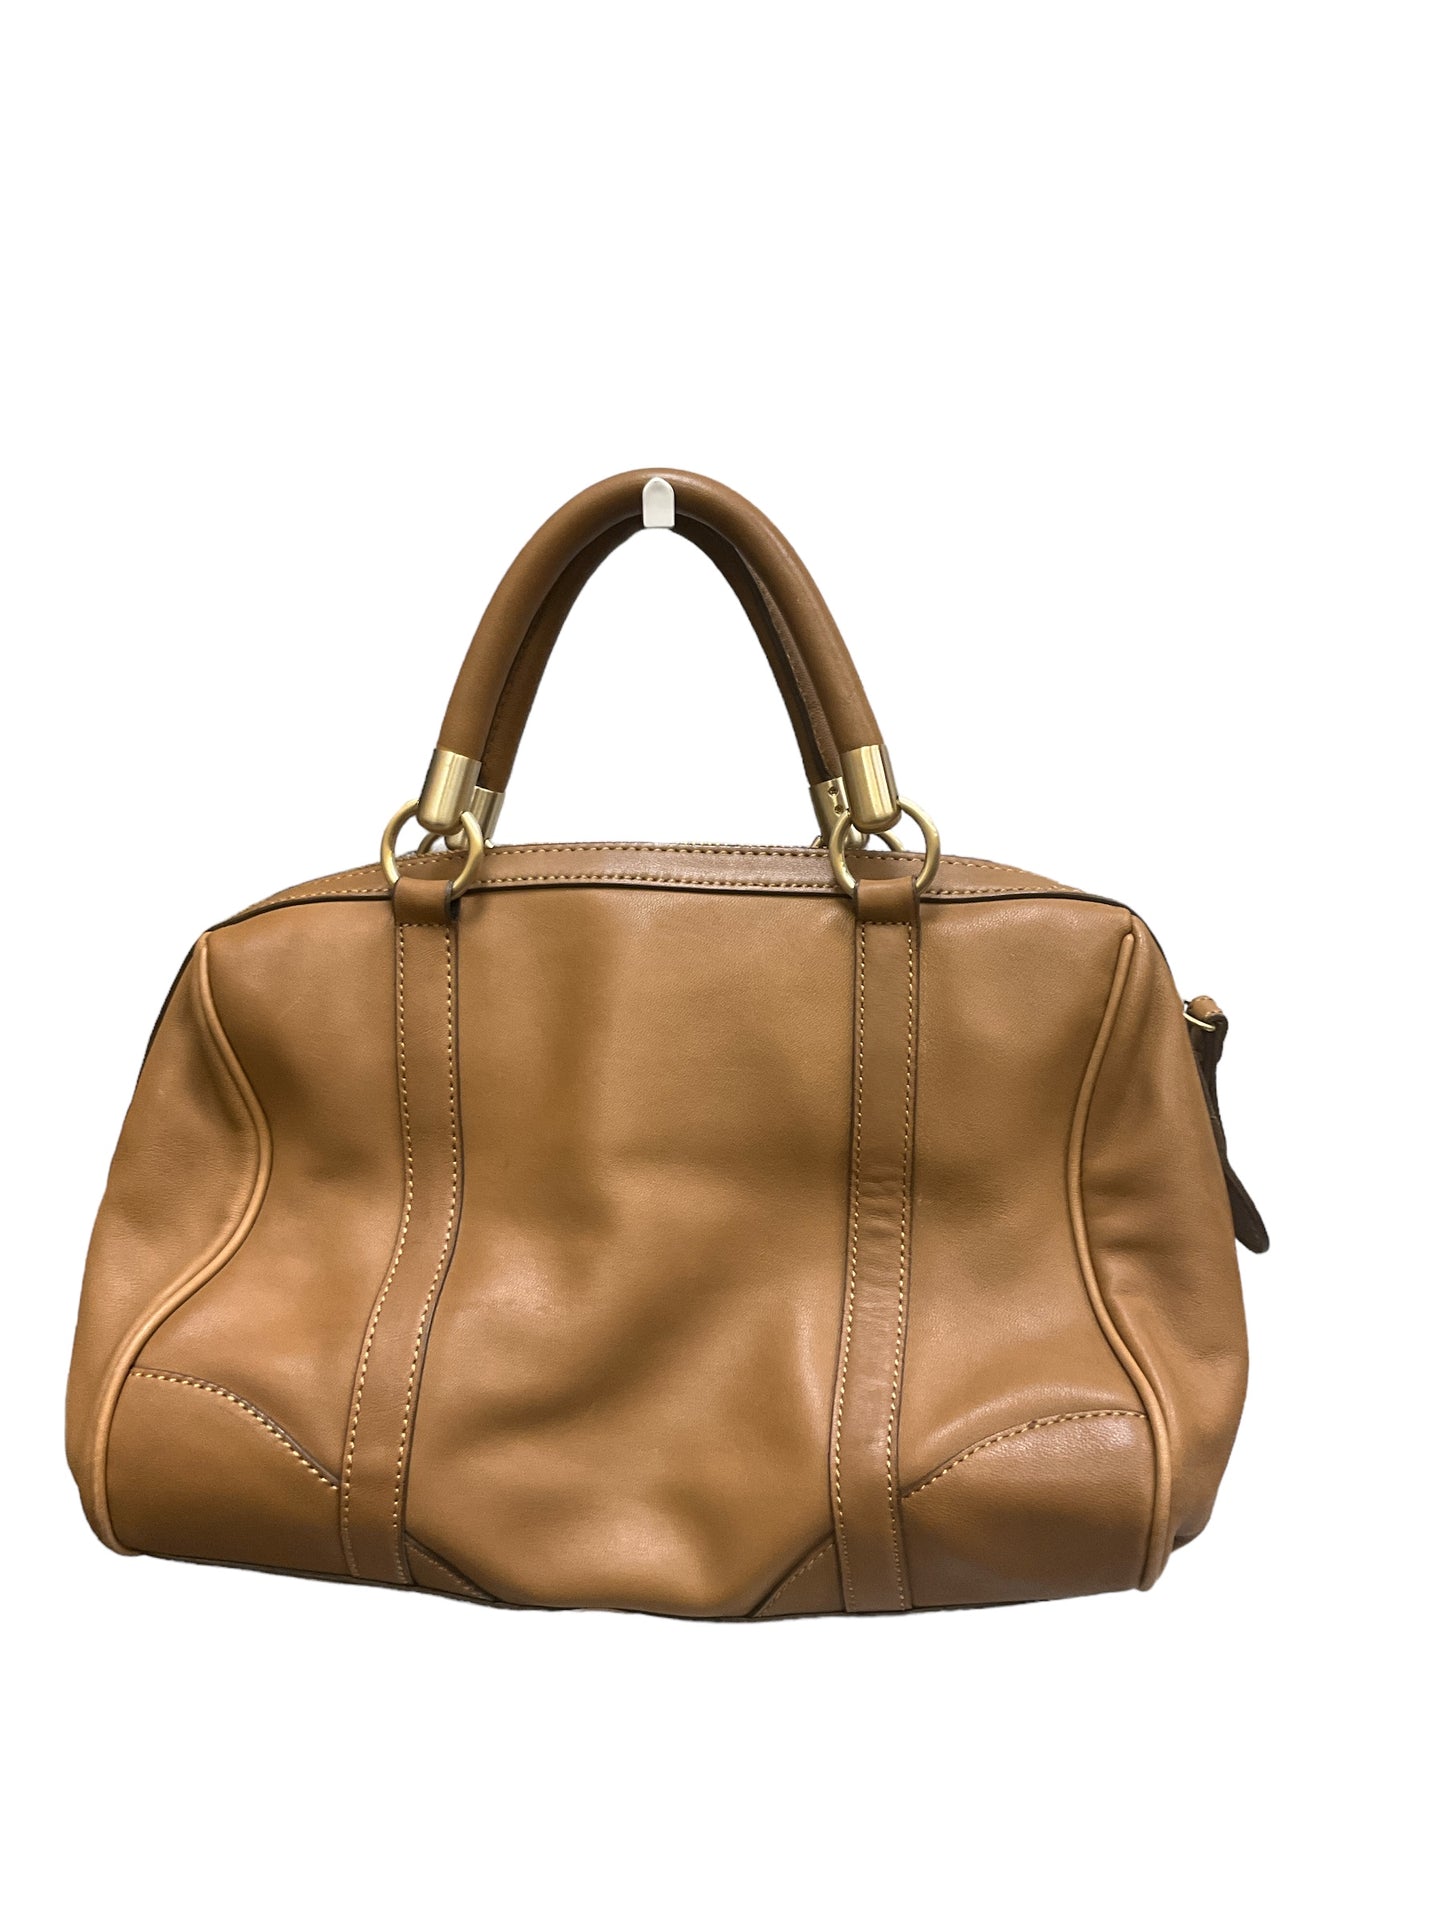 Handbag Leather By Talbots  Size: Large